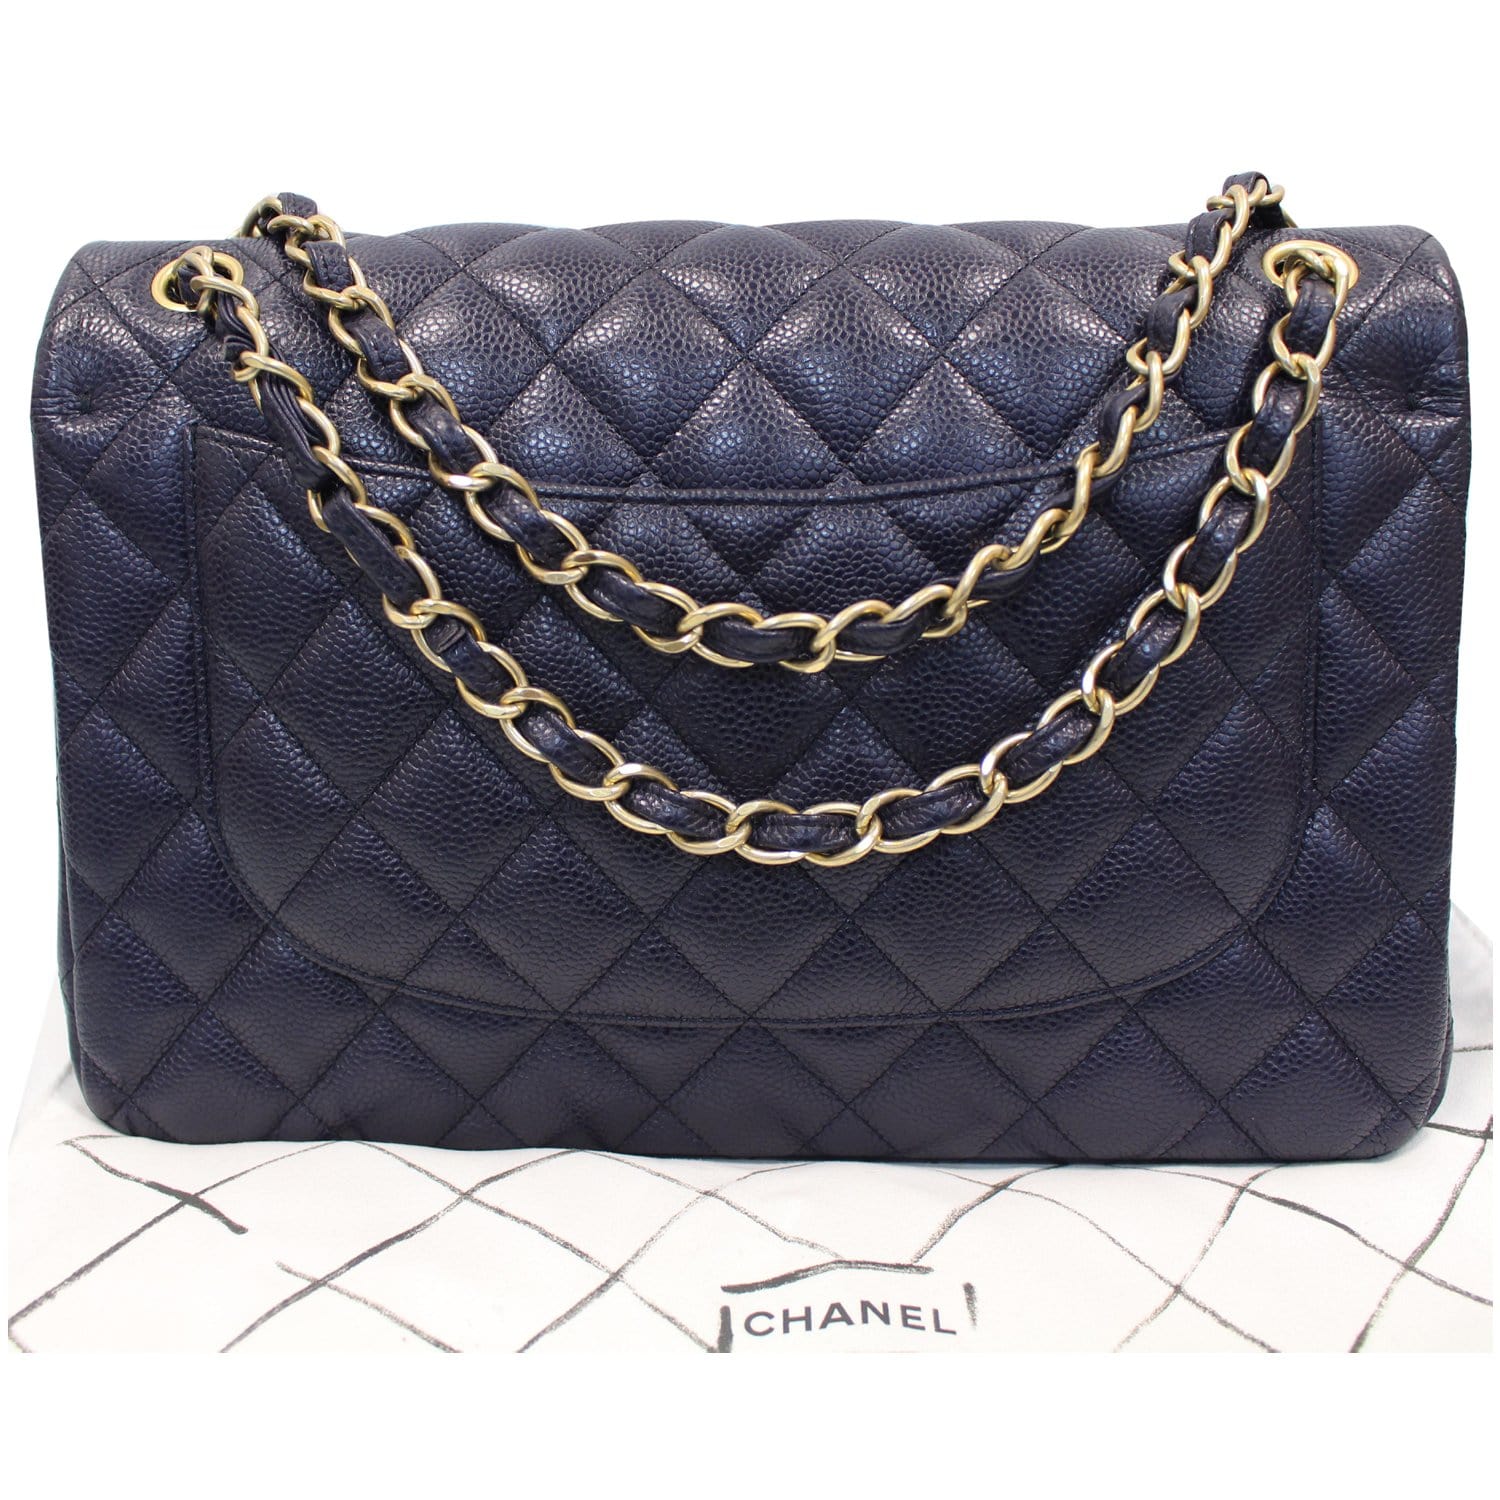 Chanel Navy Caviar Leather Flap Bag, 2011